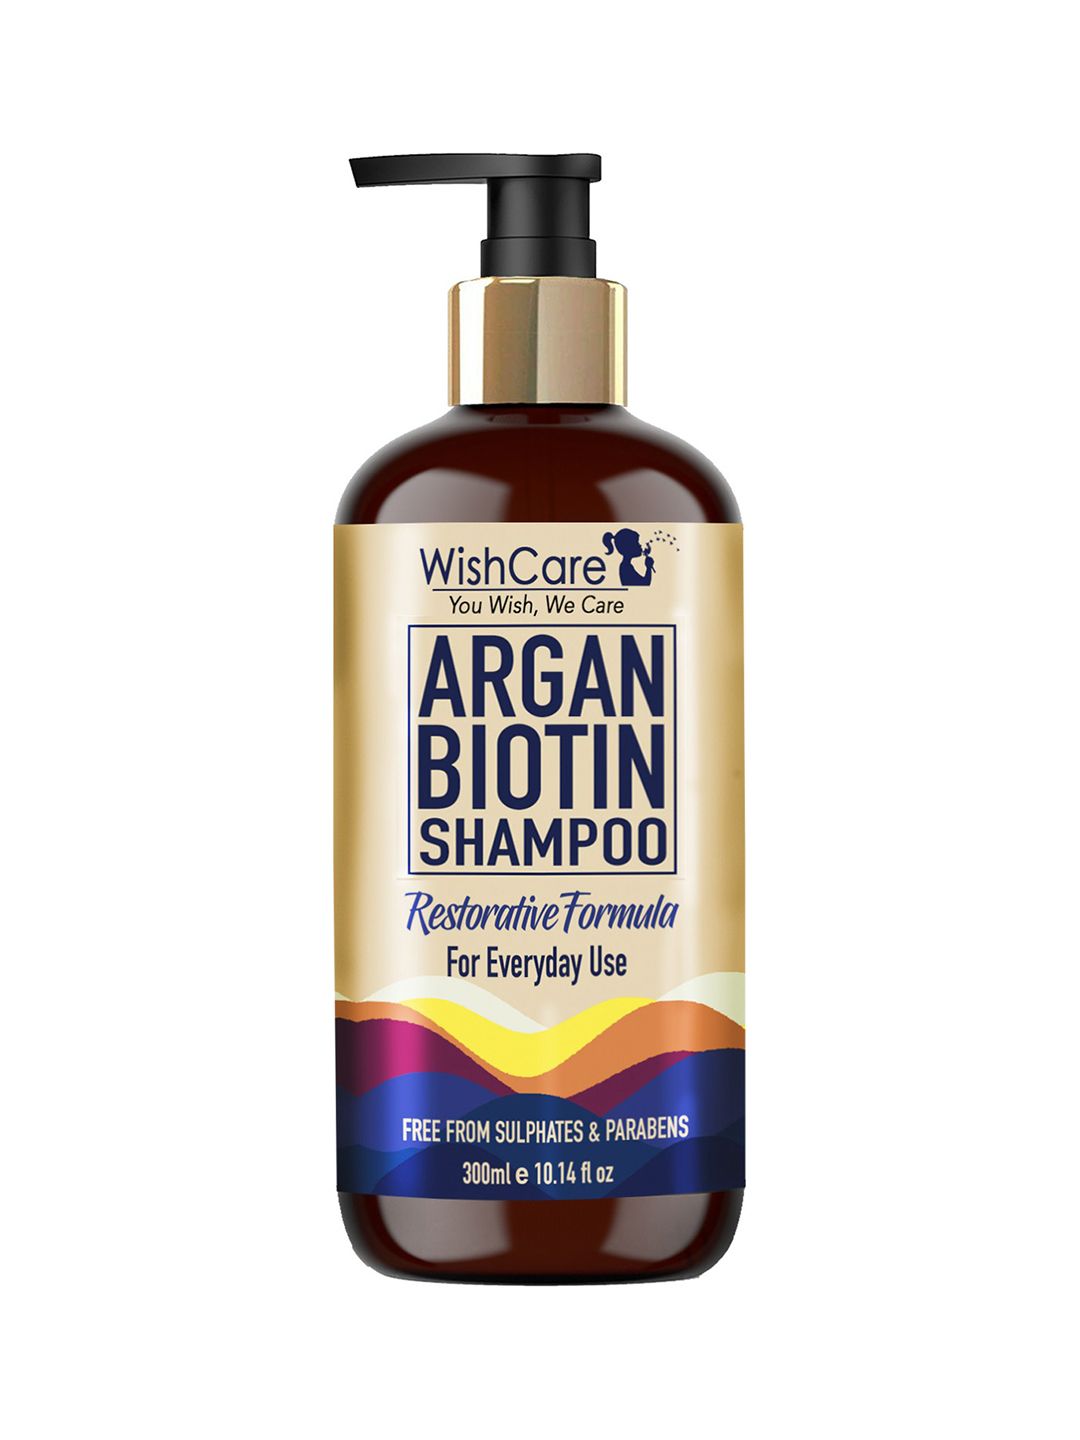 WishCare Unisex Argan Biotin Shampoo - Restorative Formula 300 ml Price in India